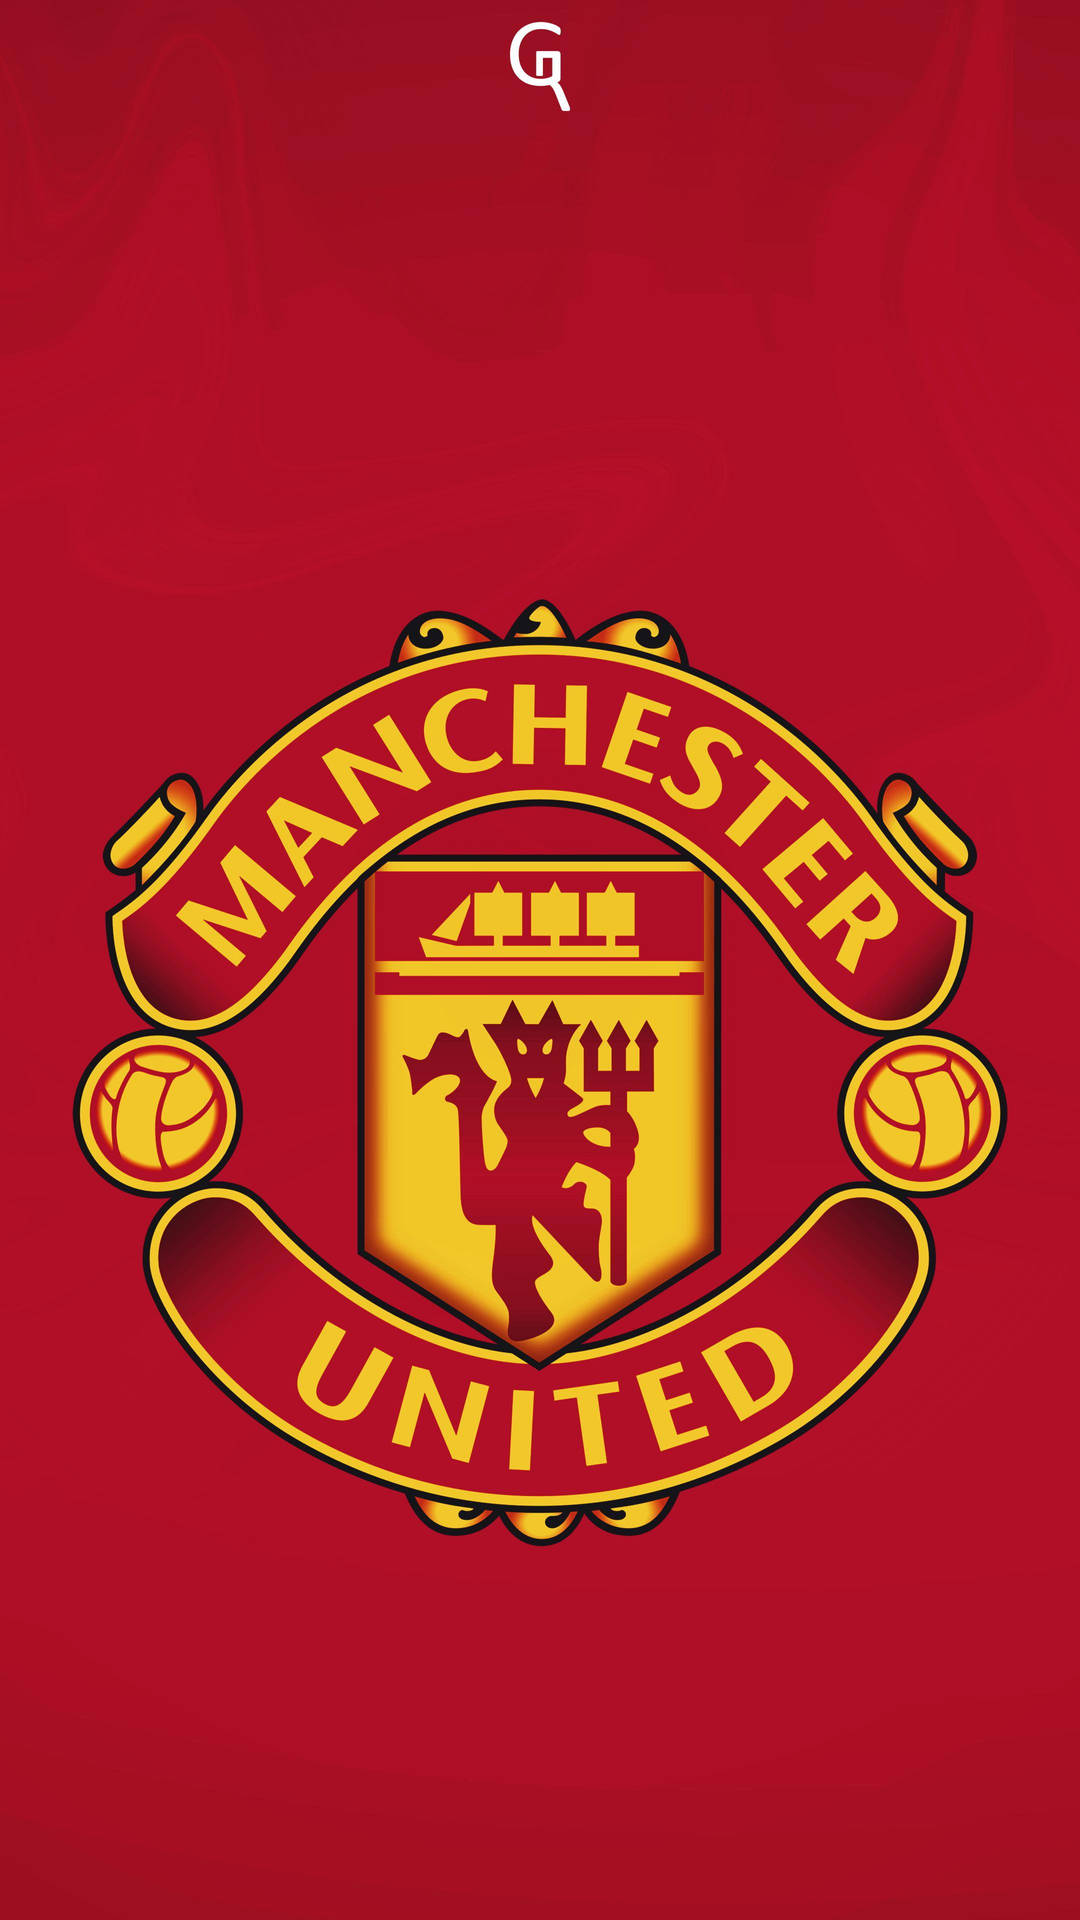 Captivating Manchester United Devil Symbol Mobile Wallpaper Wallpaper